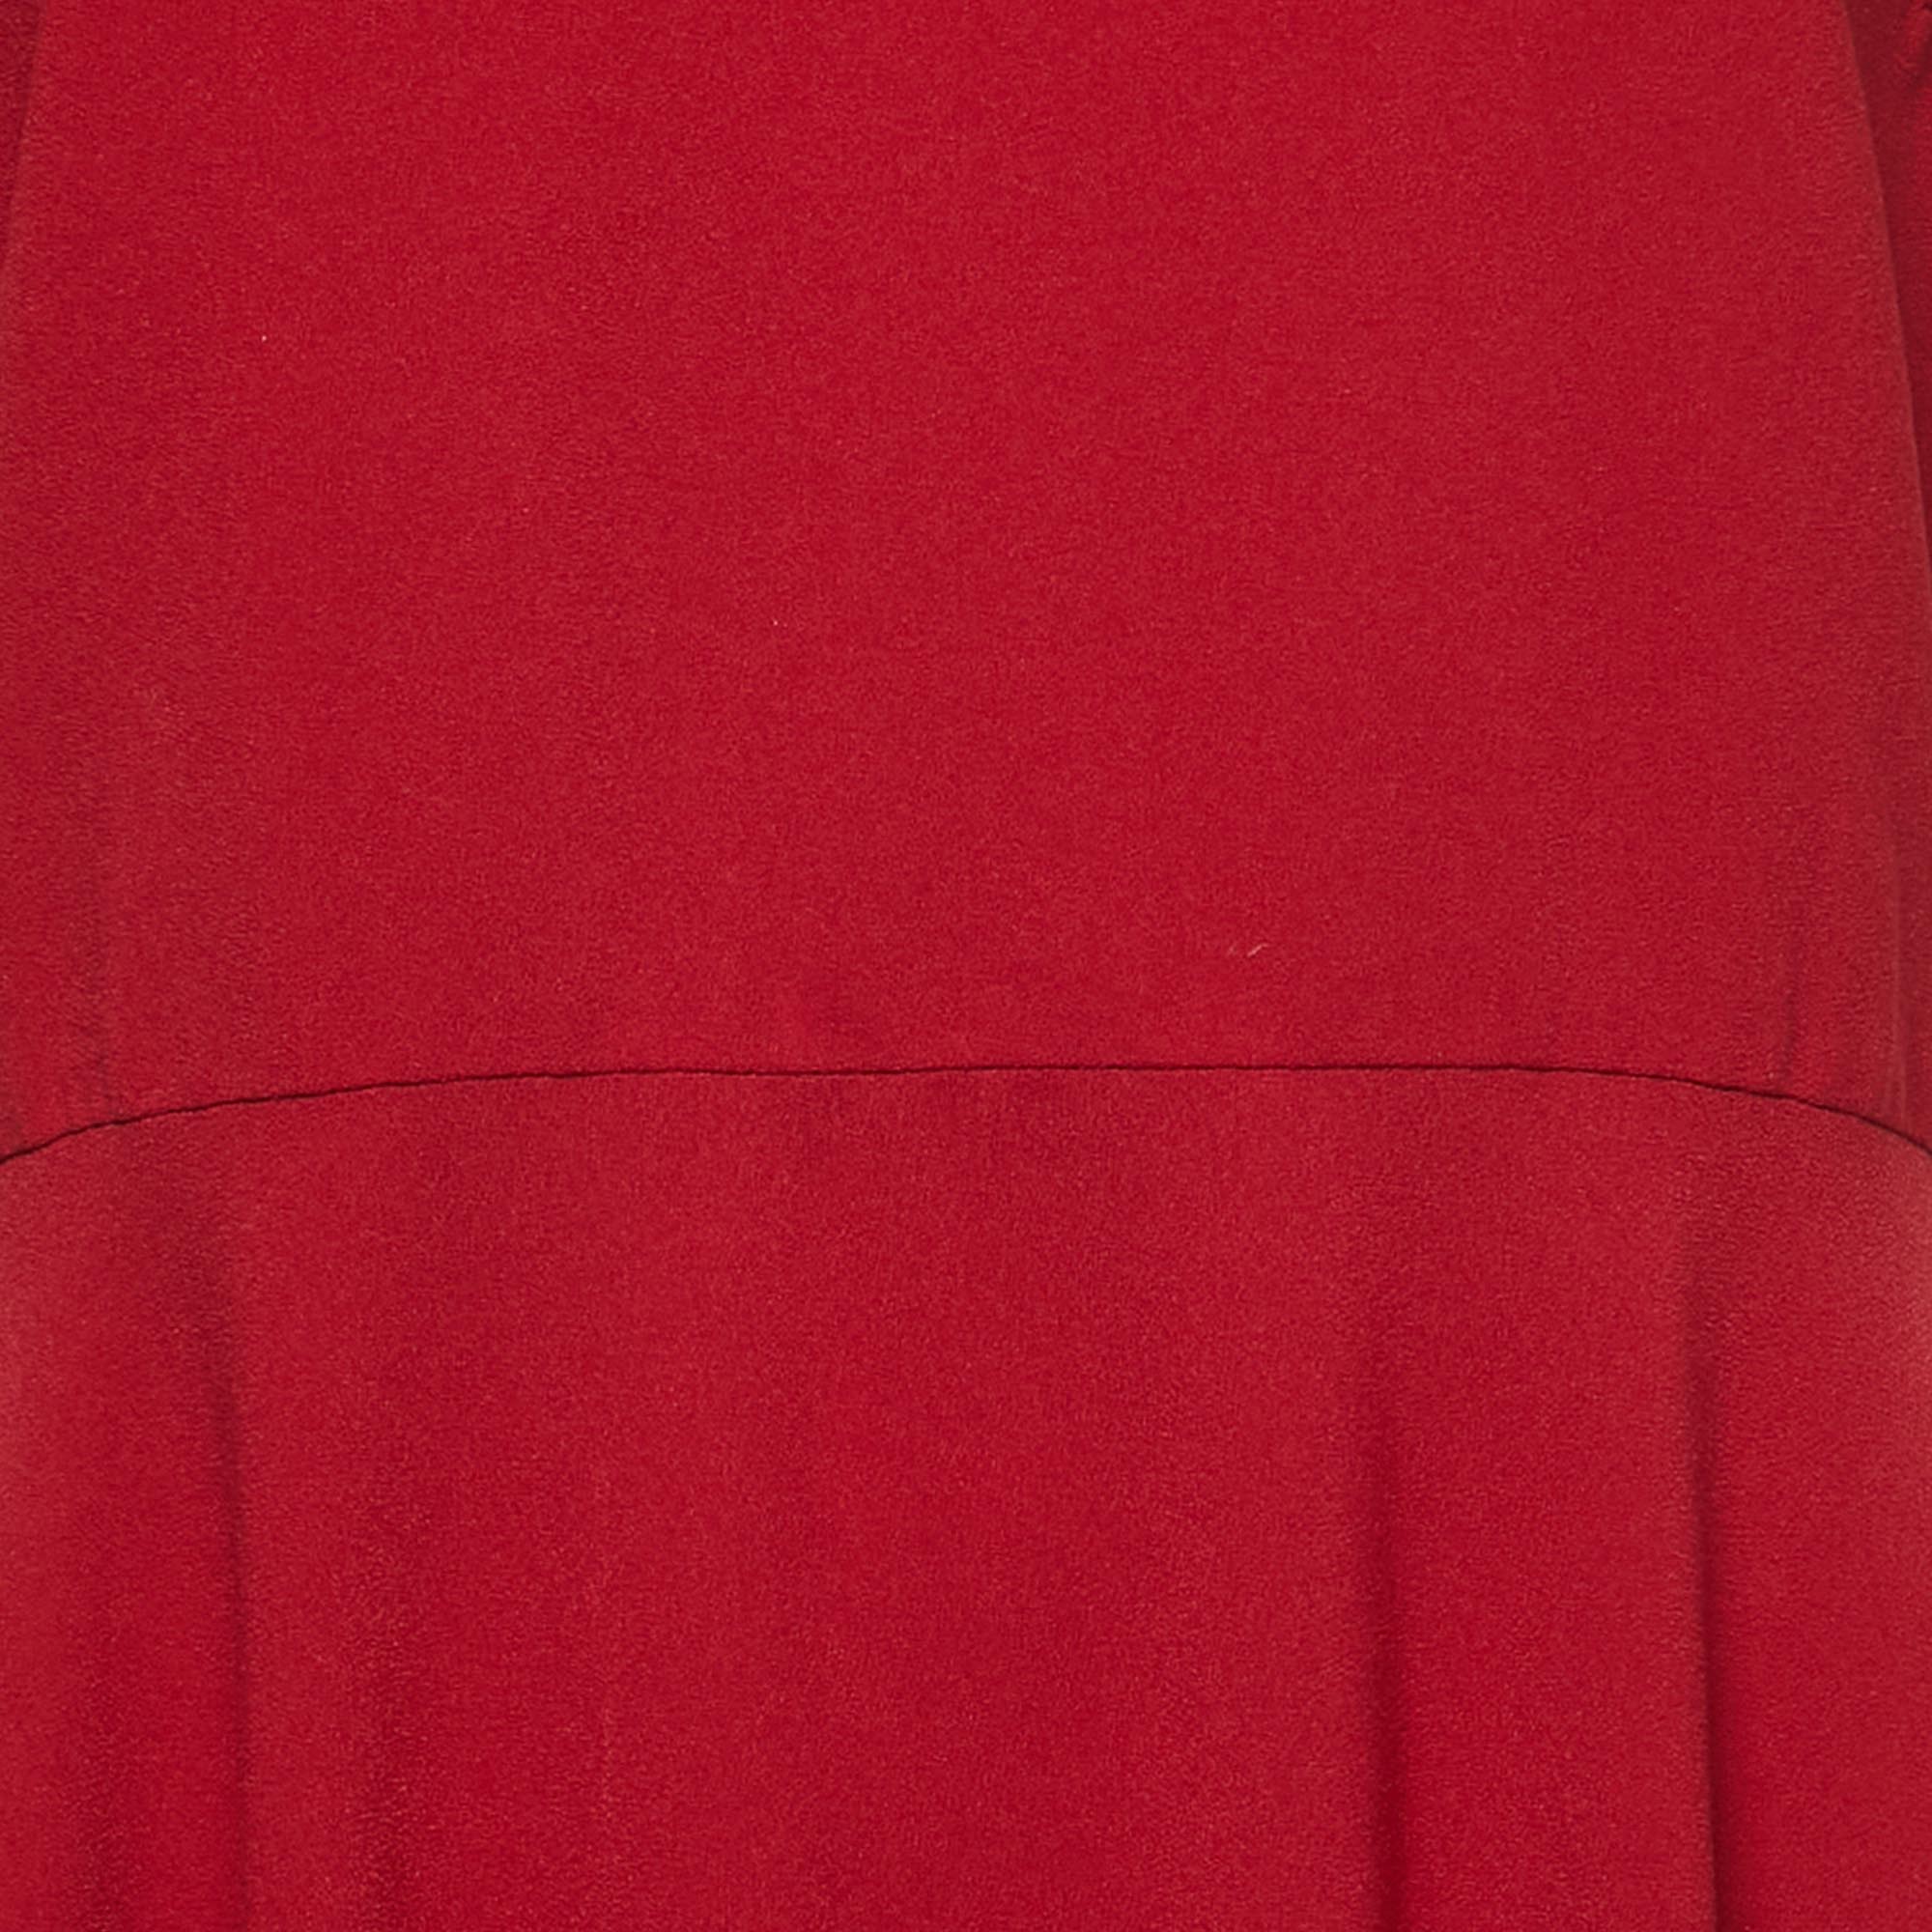 Roksanda Red/Orange Crepe A-Line Sleeveless Maxi Dress L